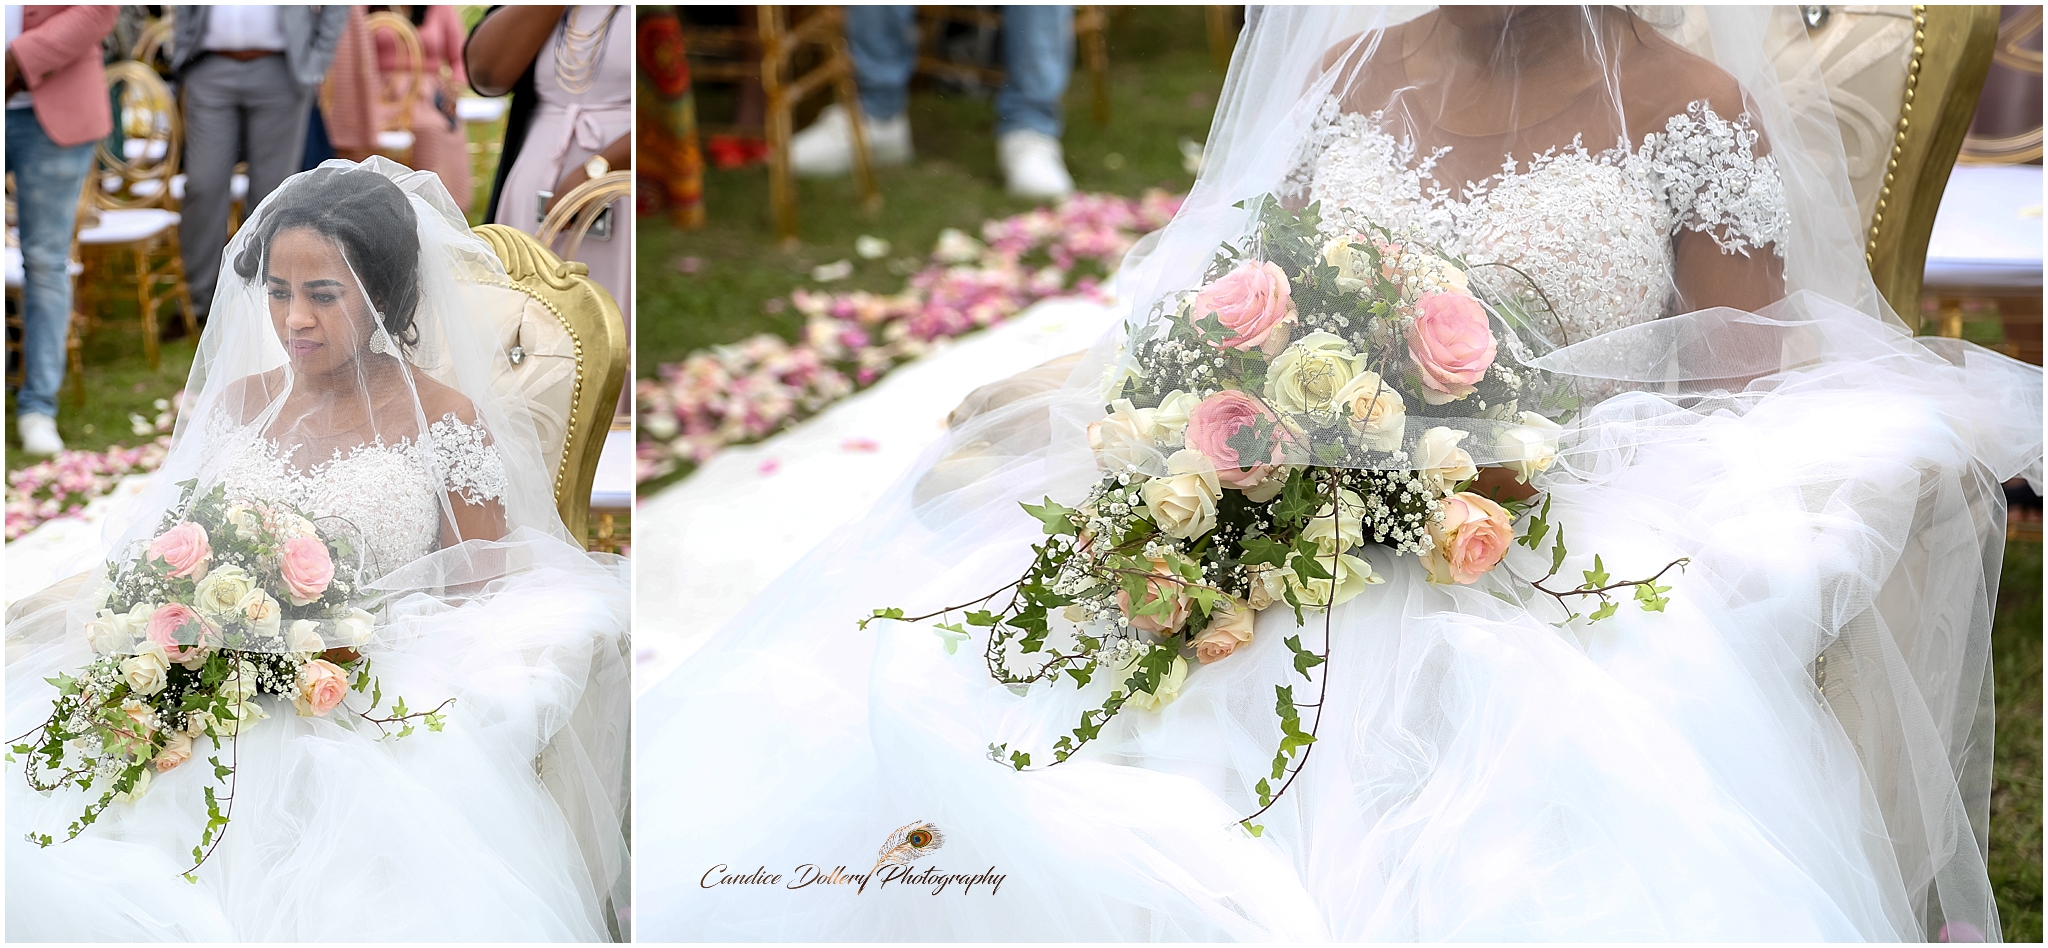 wedding - Candice Dollery Photography_3619